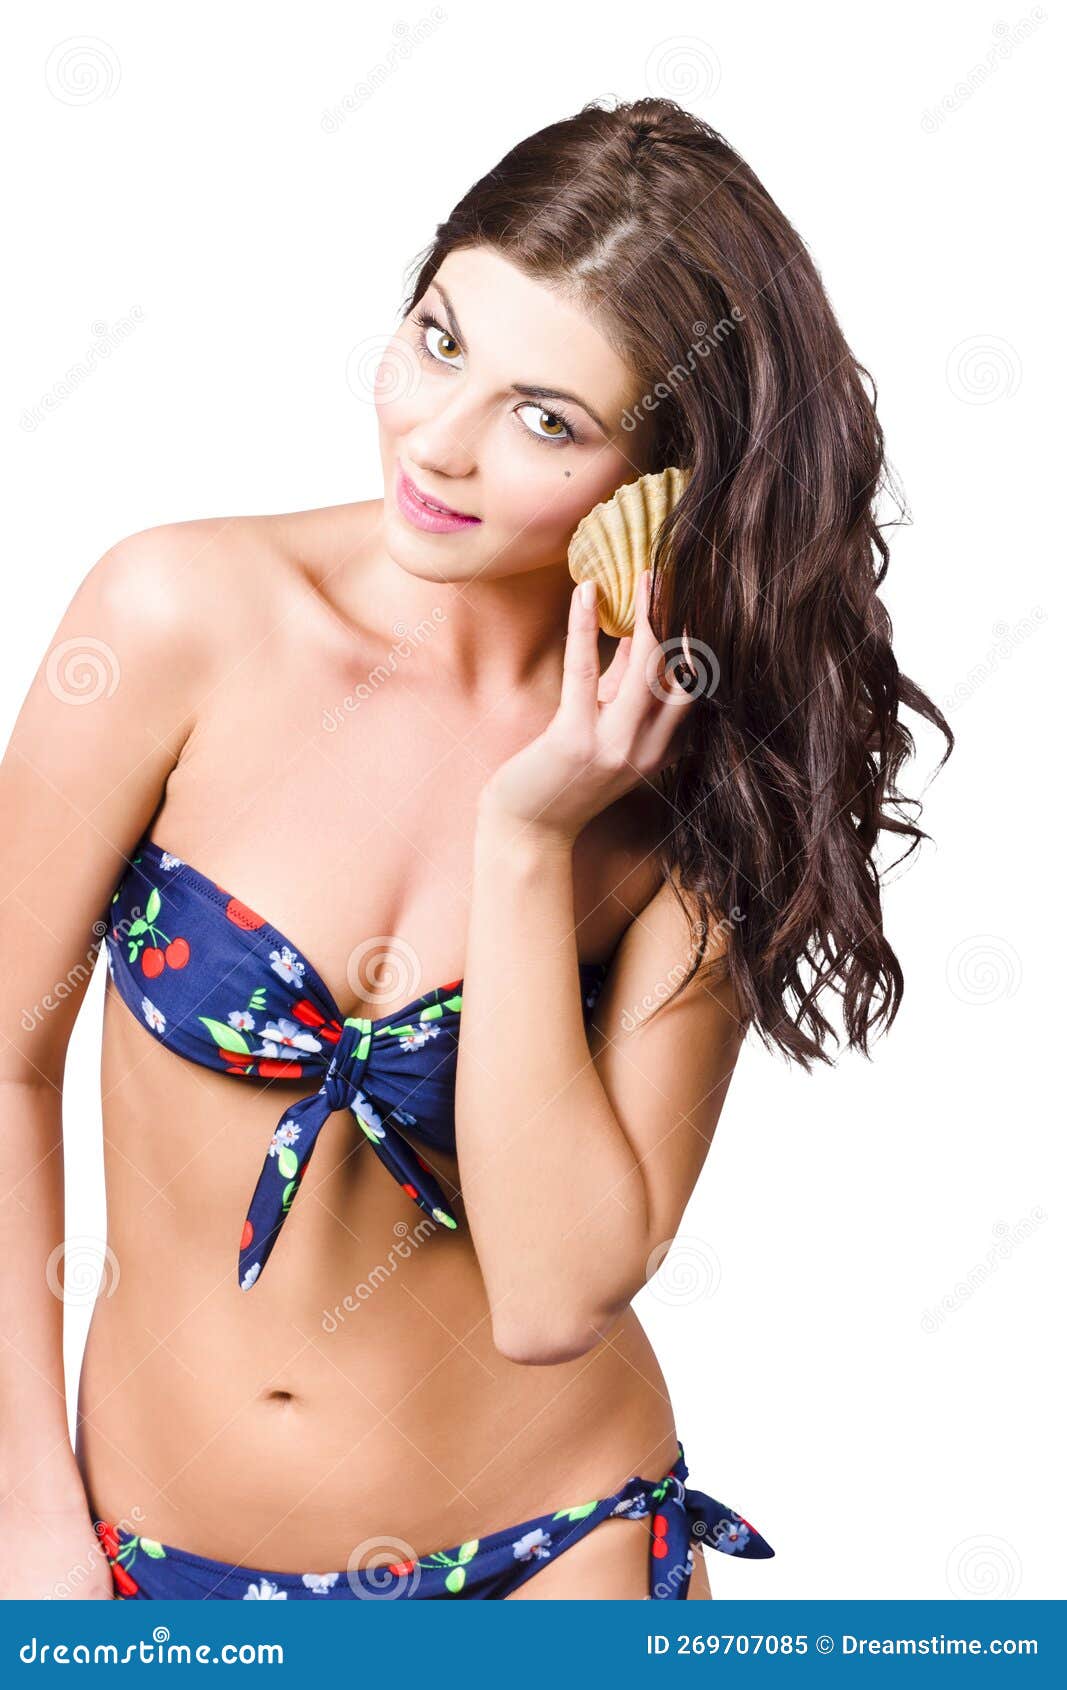 listen wife babe beach bikini pic